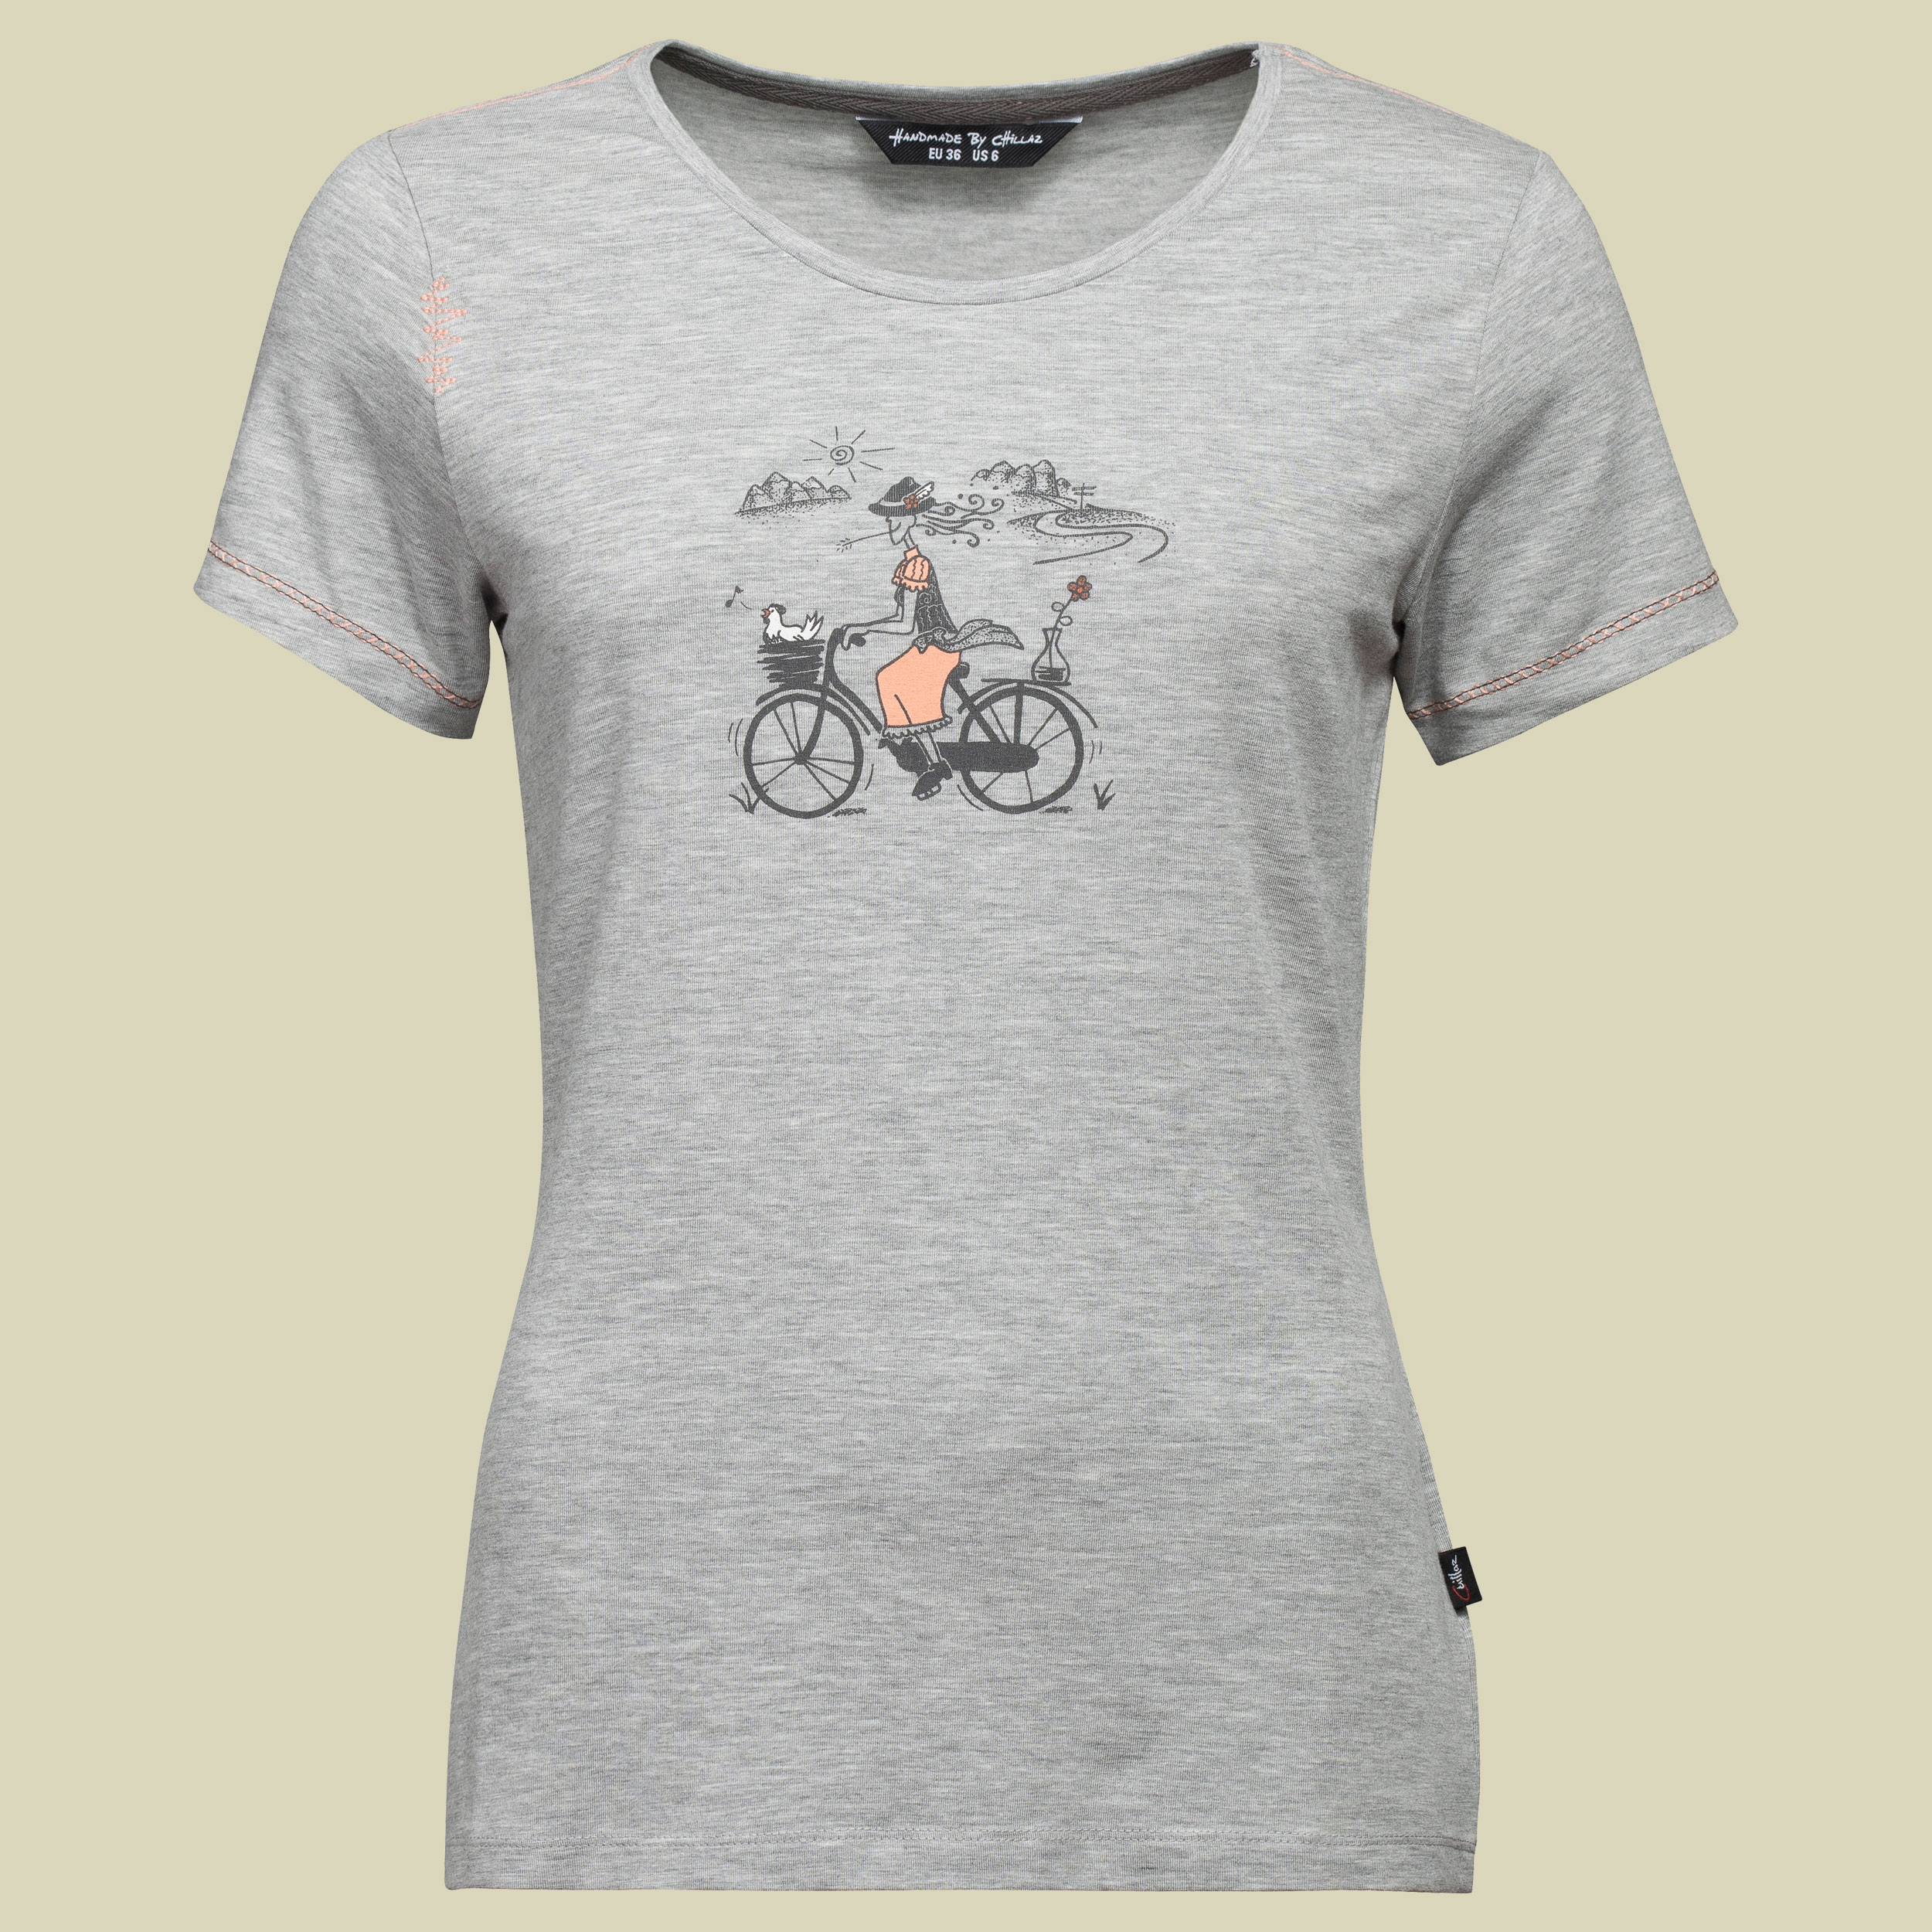 Saile Tyrolean Trip T-Shirt Women Größe 36 Farbe grey melange